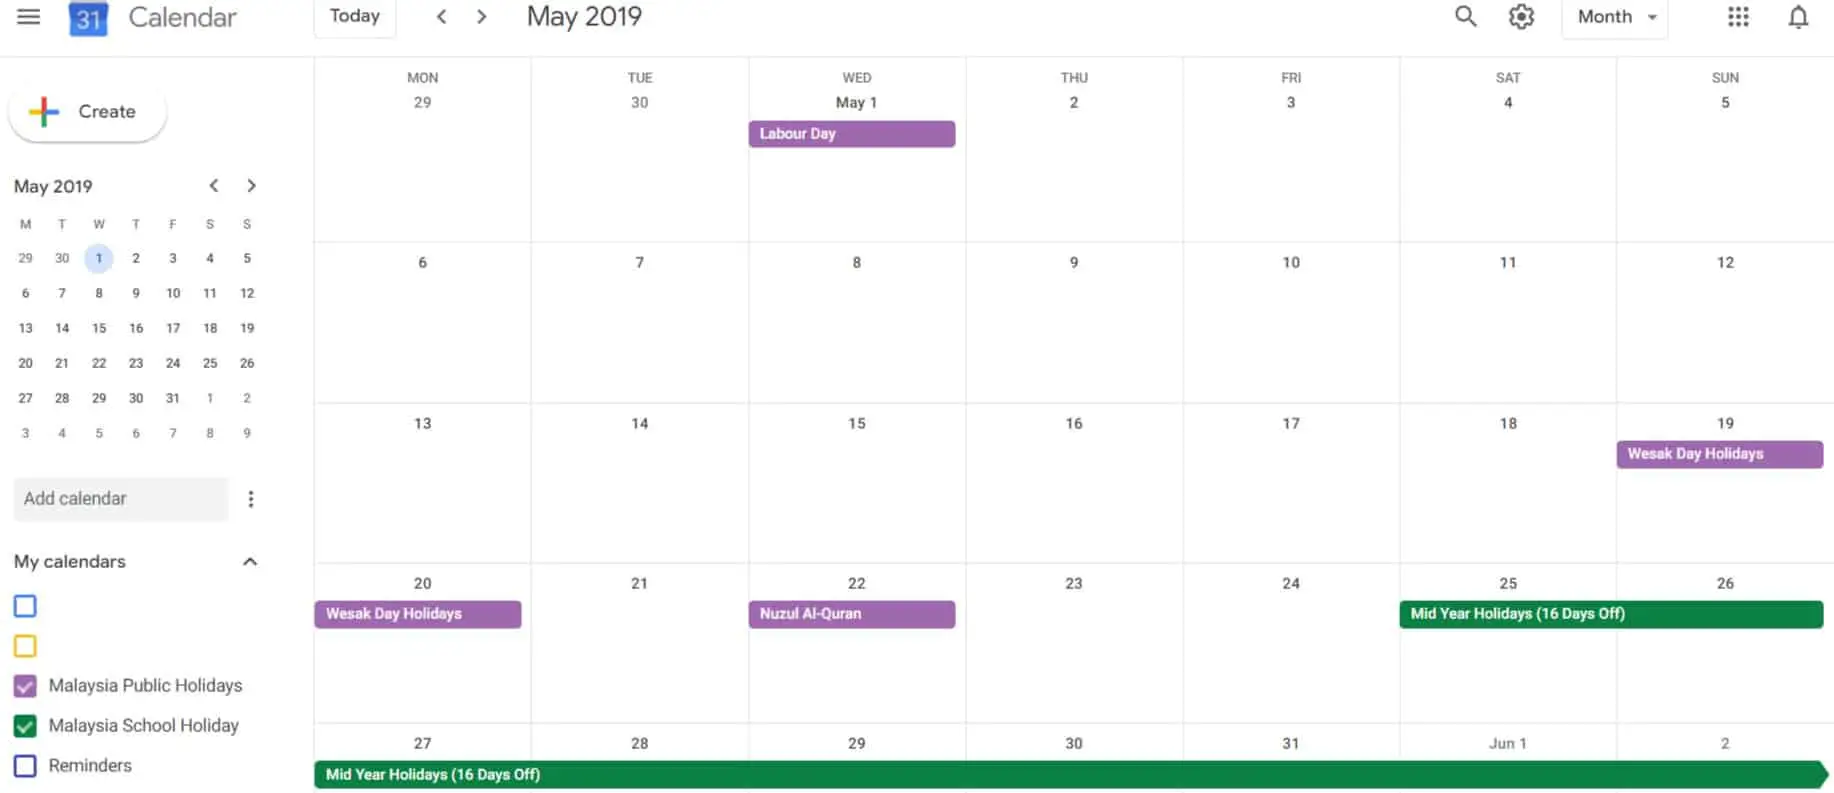 Malaysia public holidays and school holidays in Google Calendar